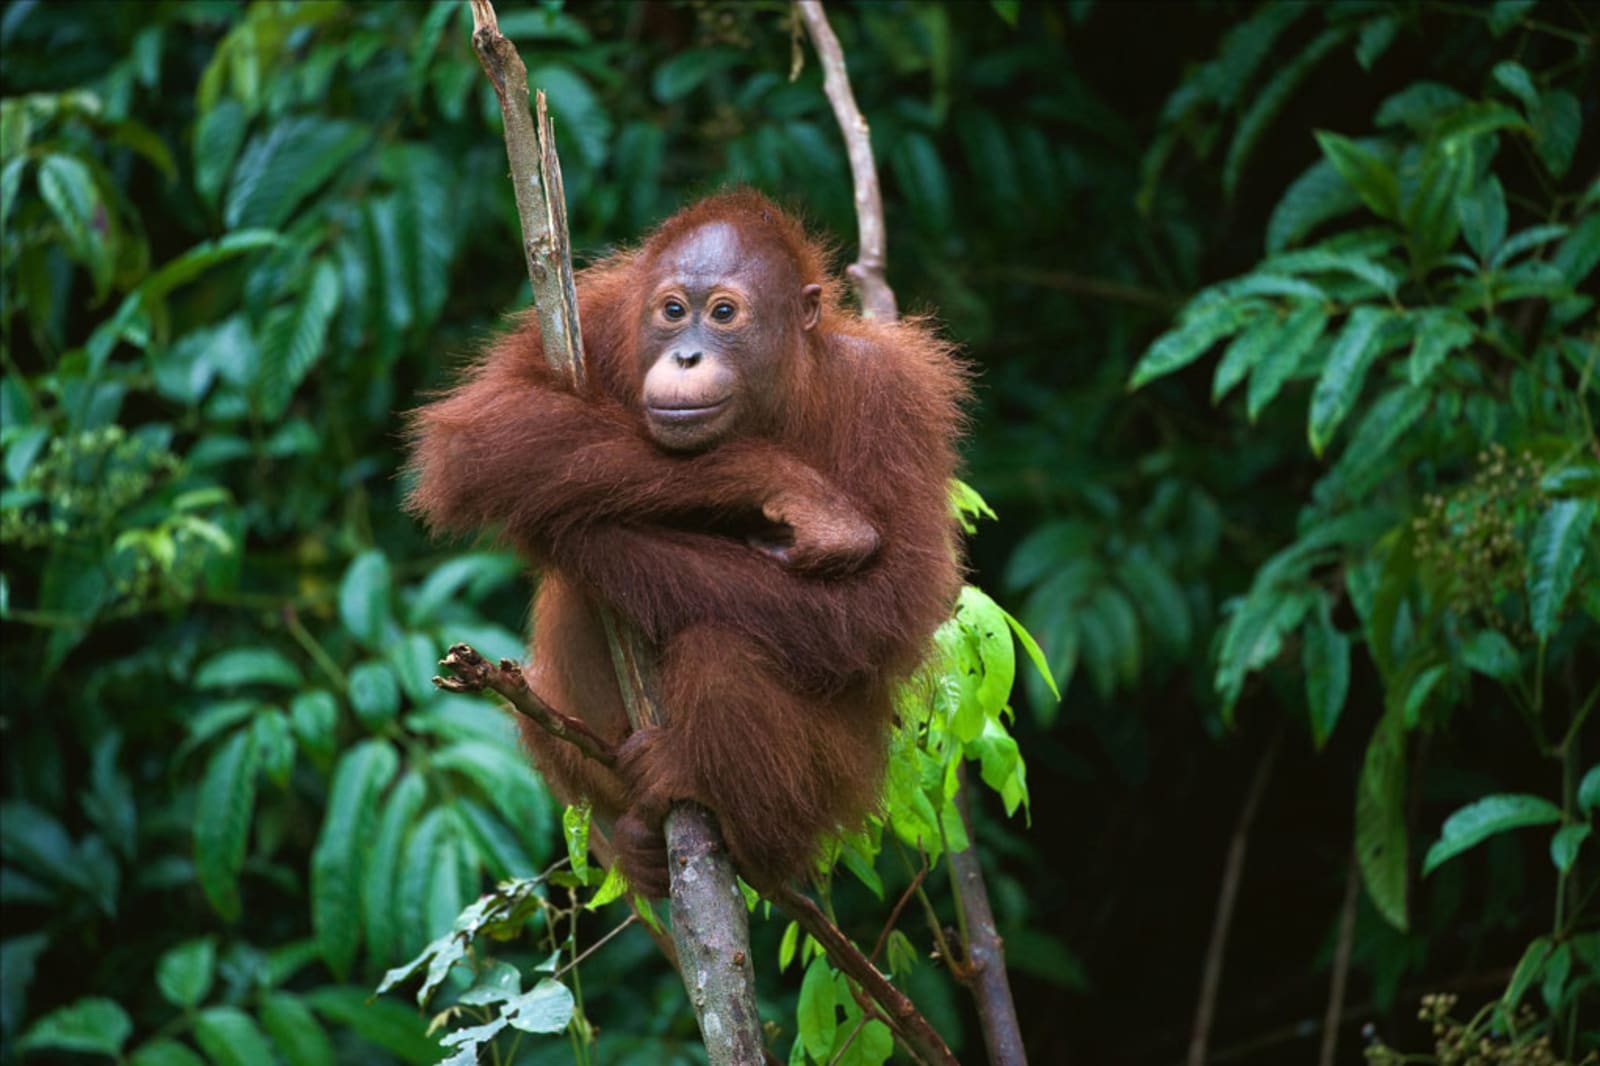 Indonesia, Borneo - Young Orangutan sitting on the tree